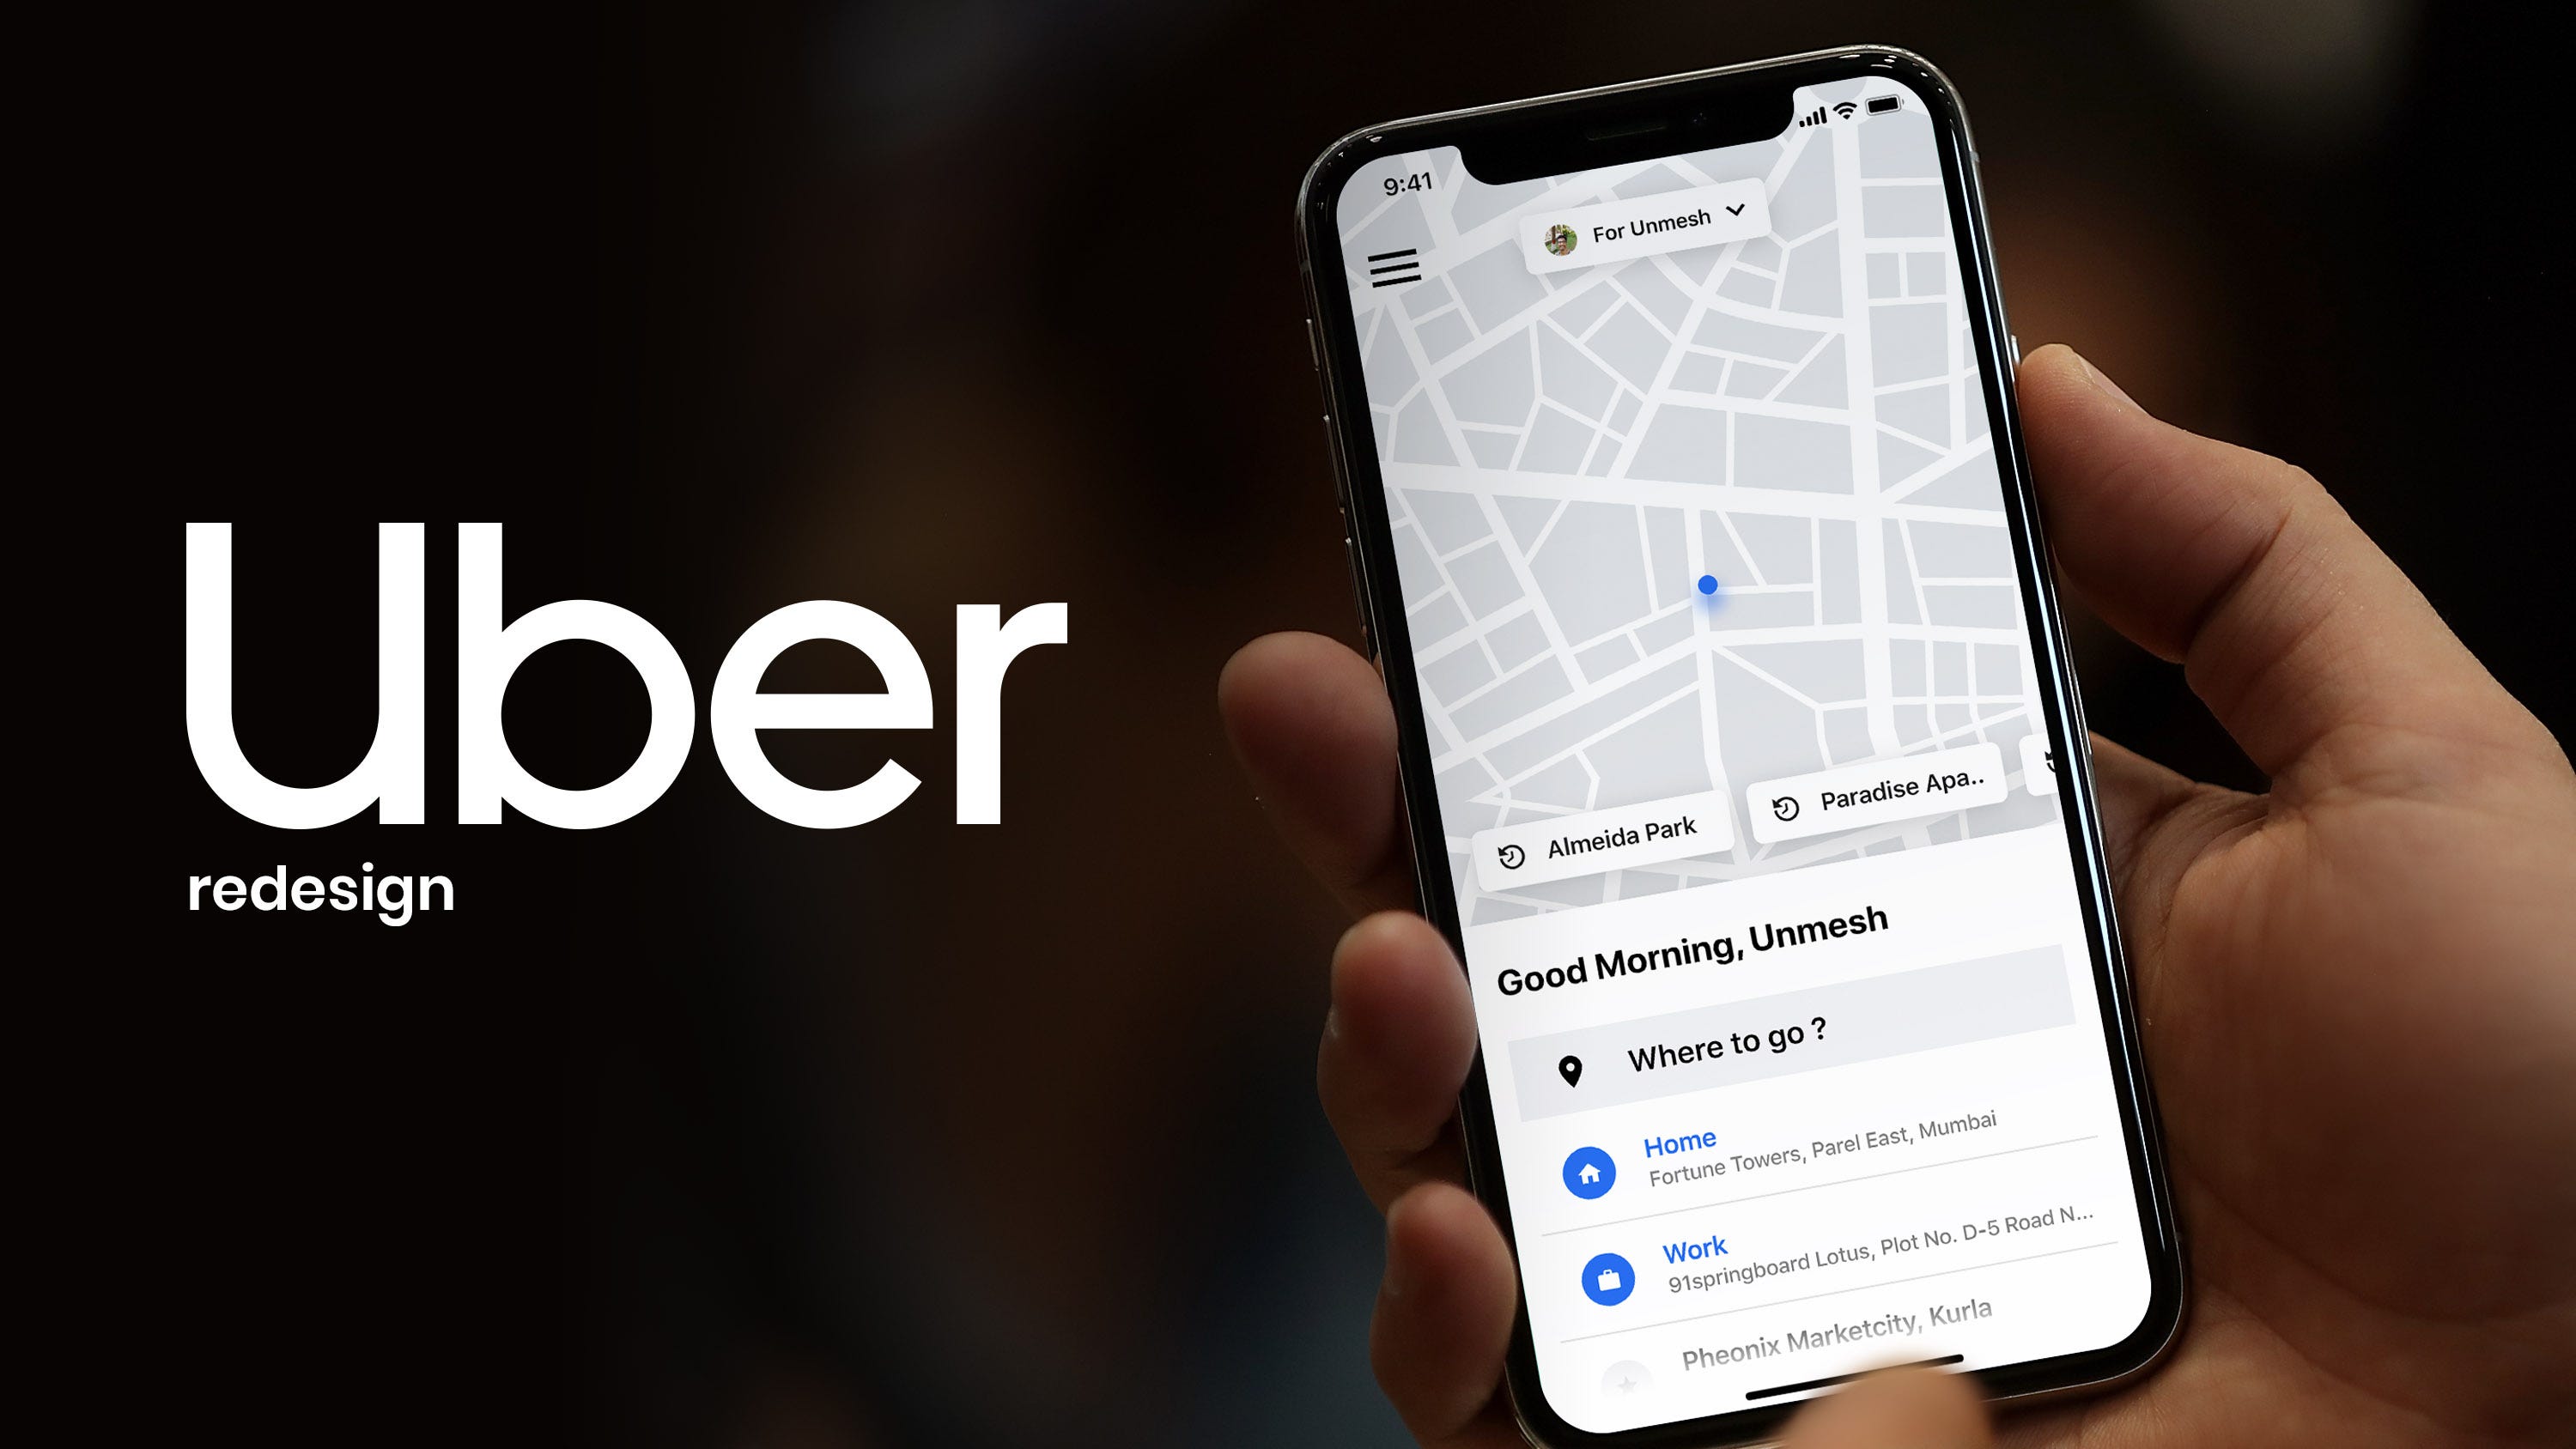 uber redesign case study